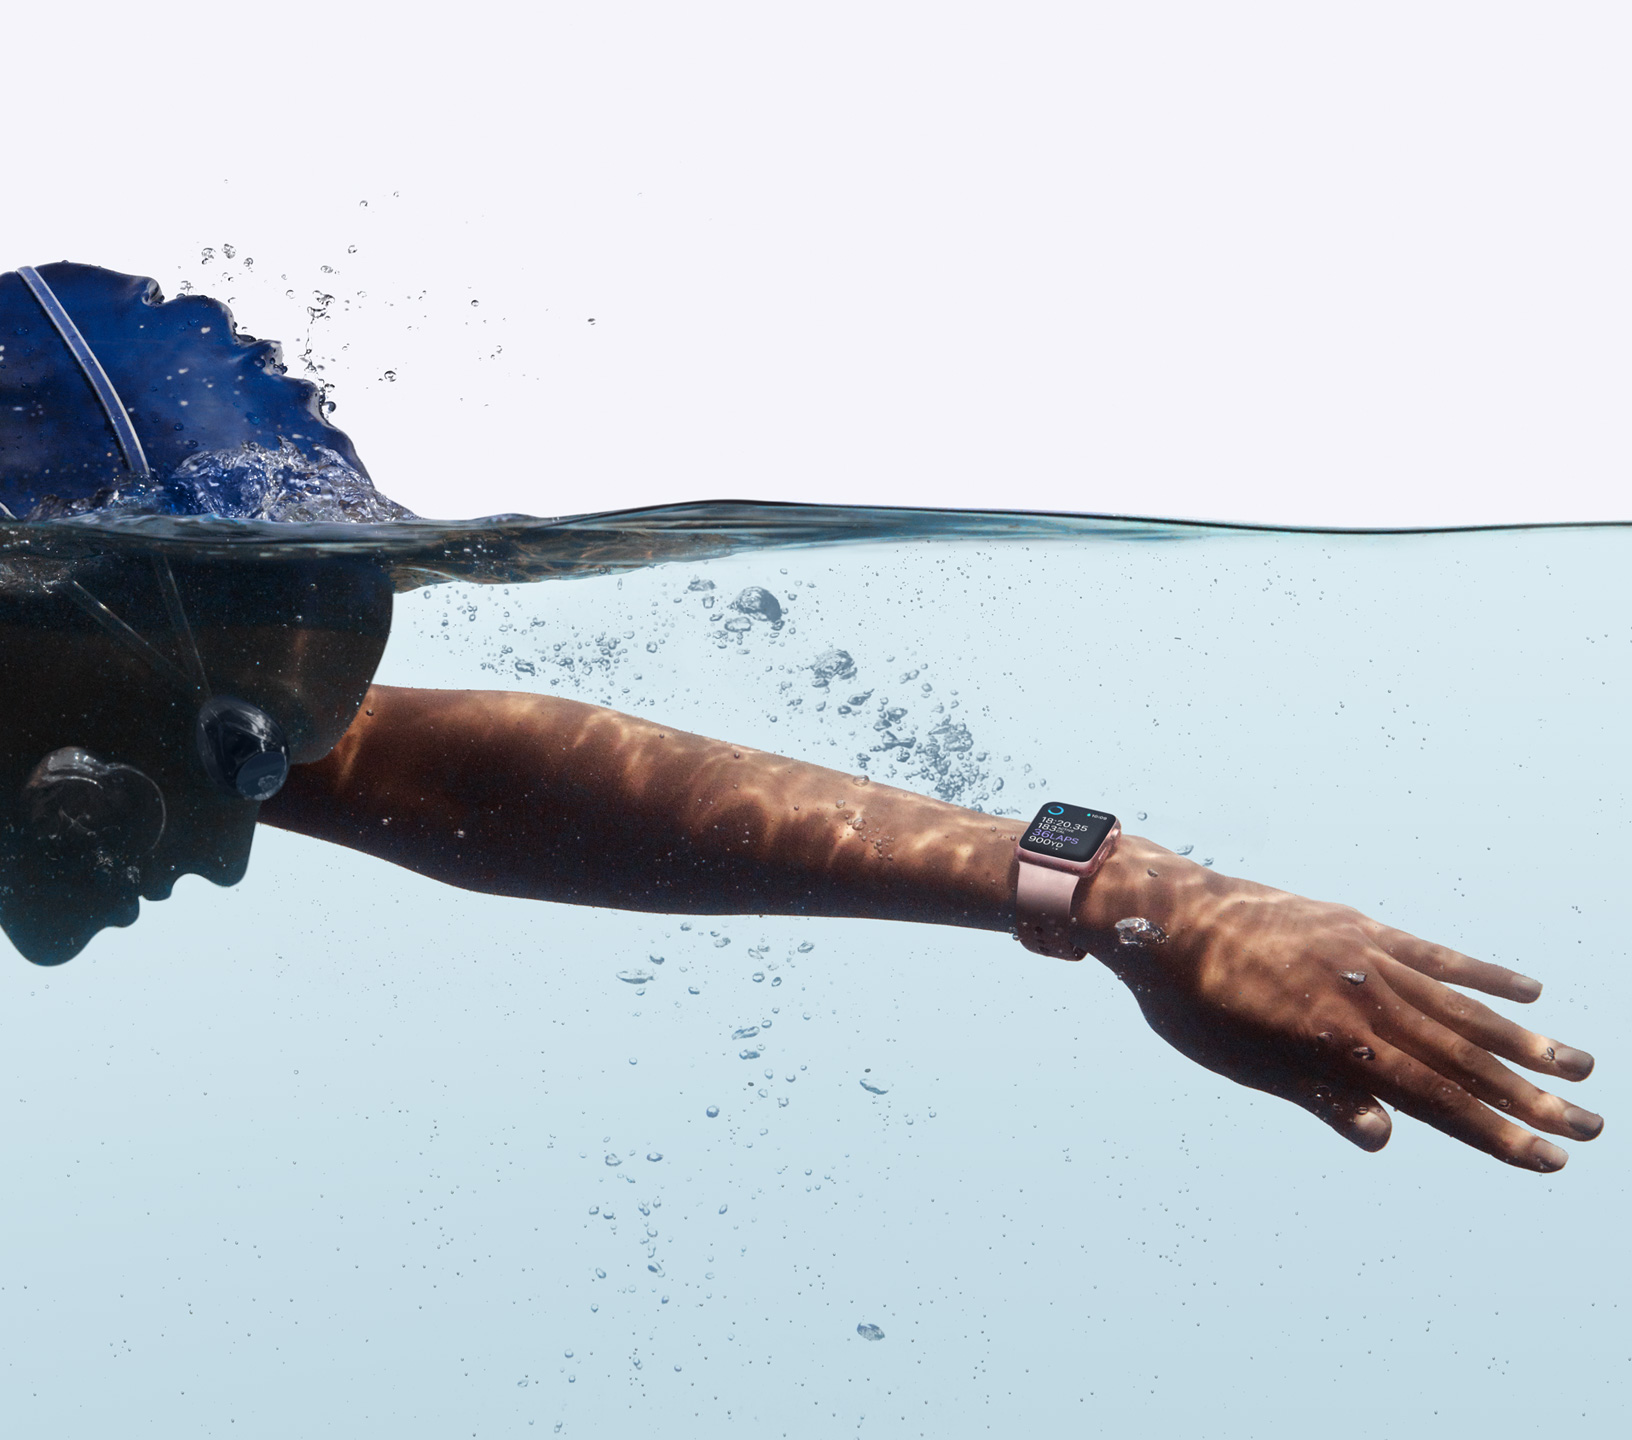 Apple Watch Series 2 Swimming